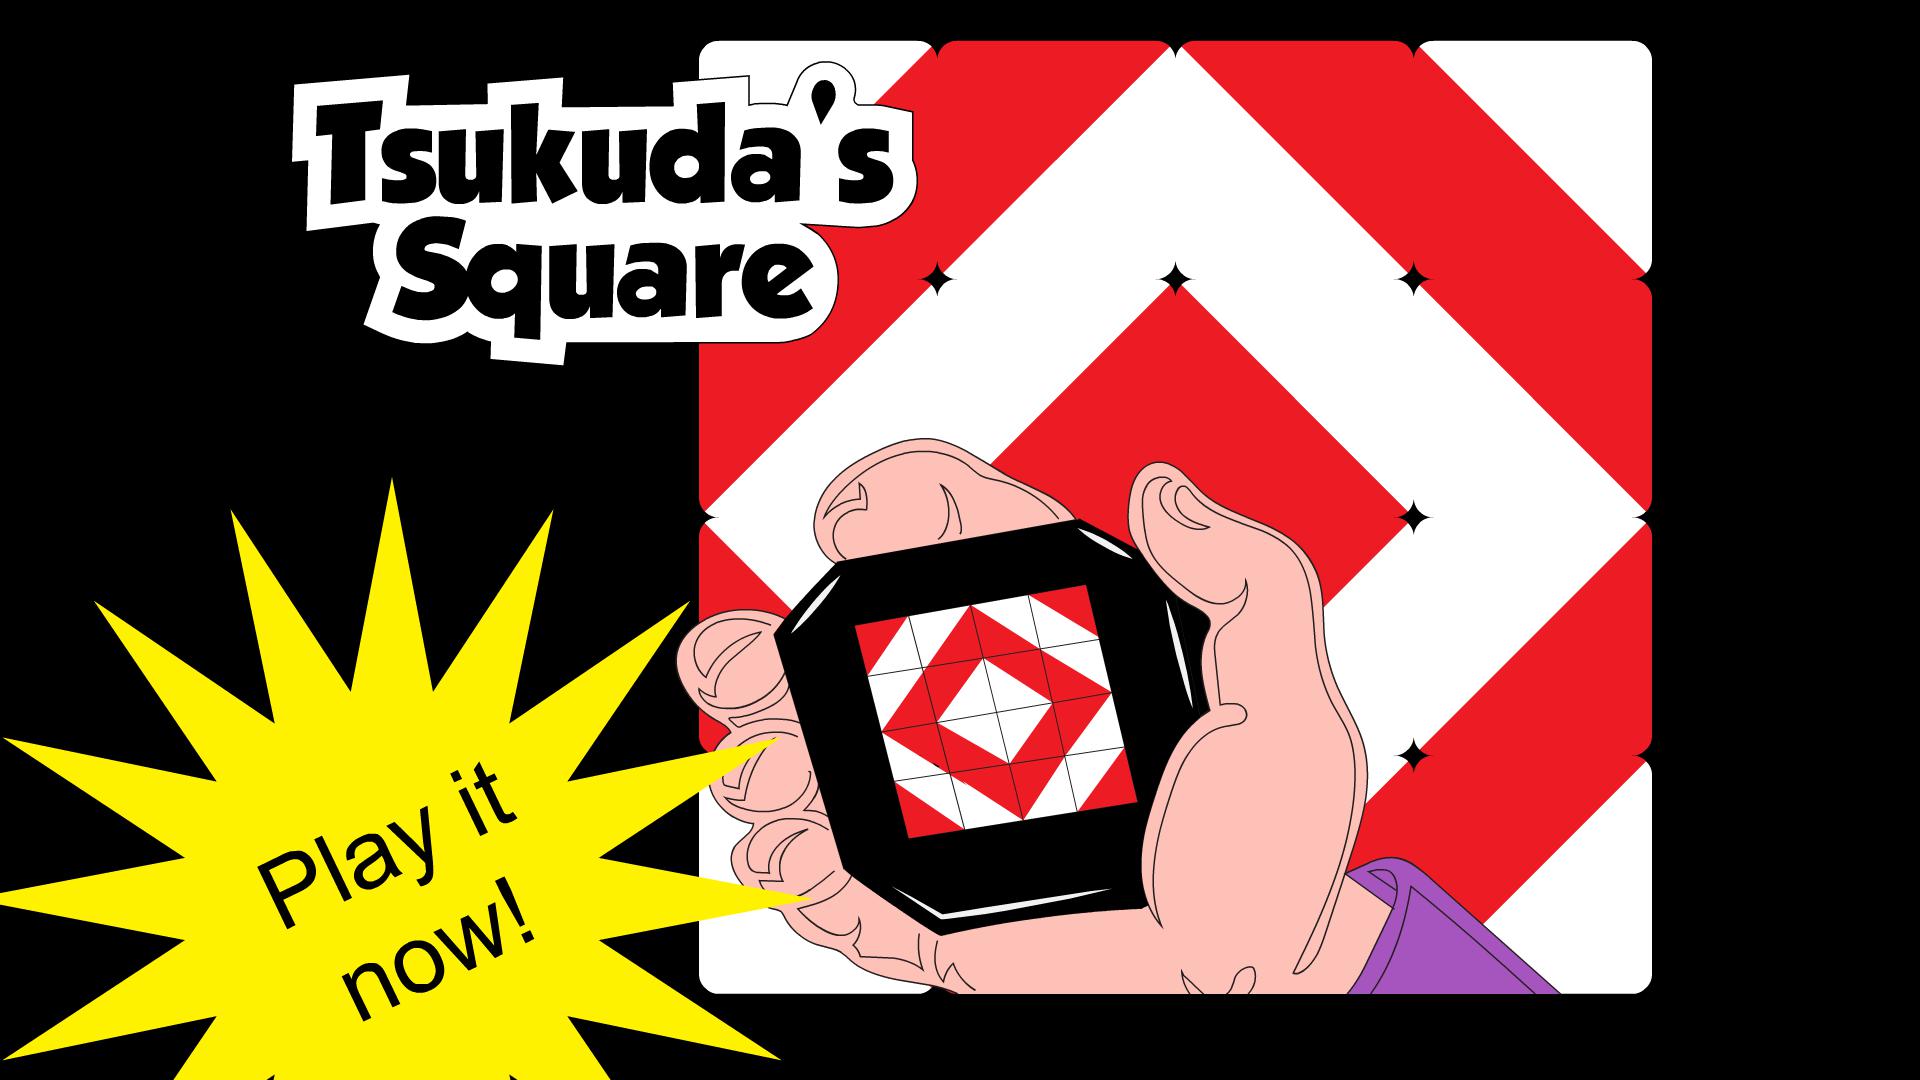 Tsukuda's square